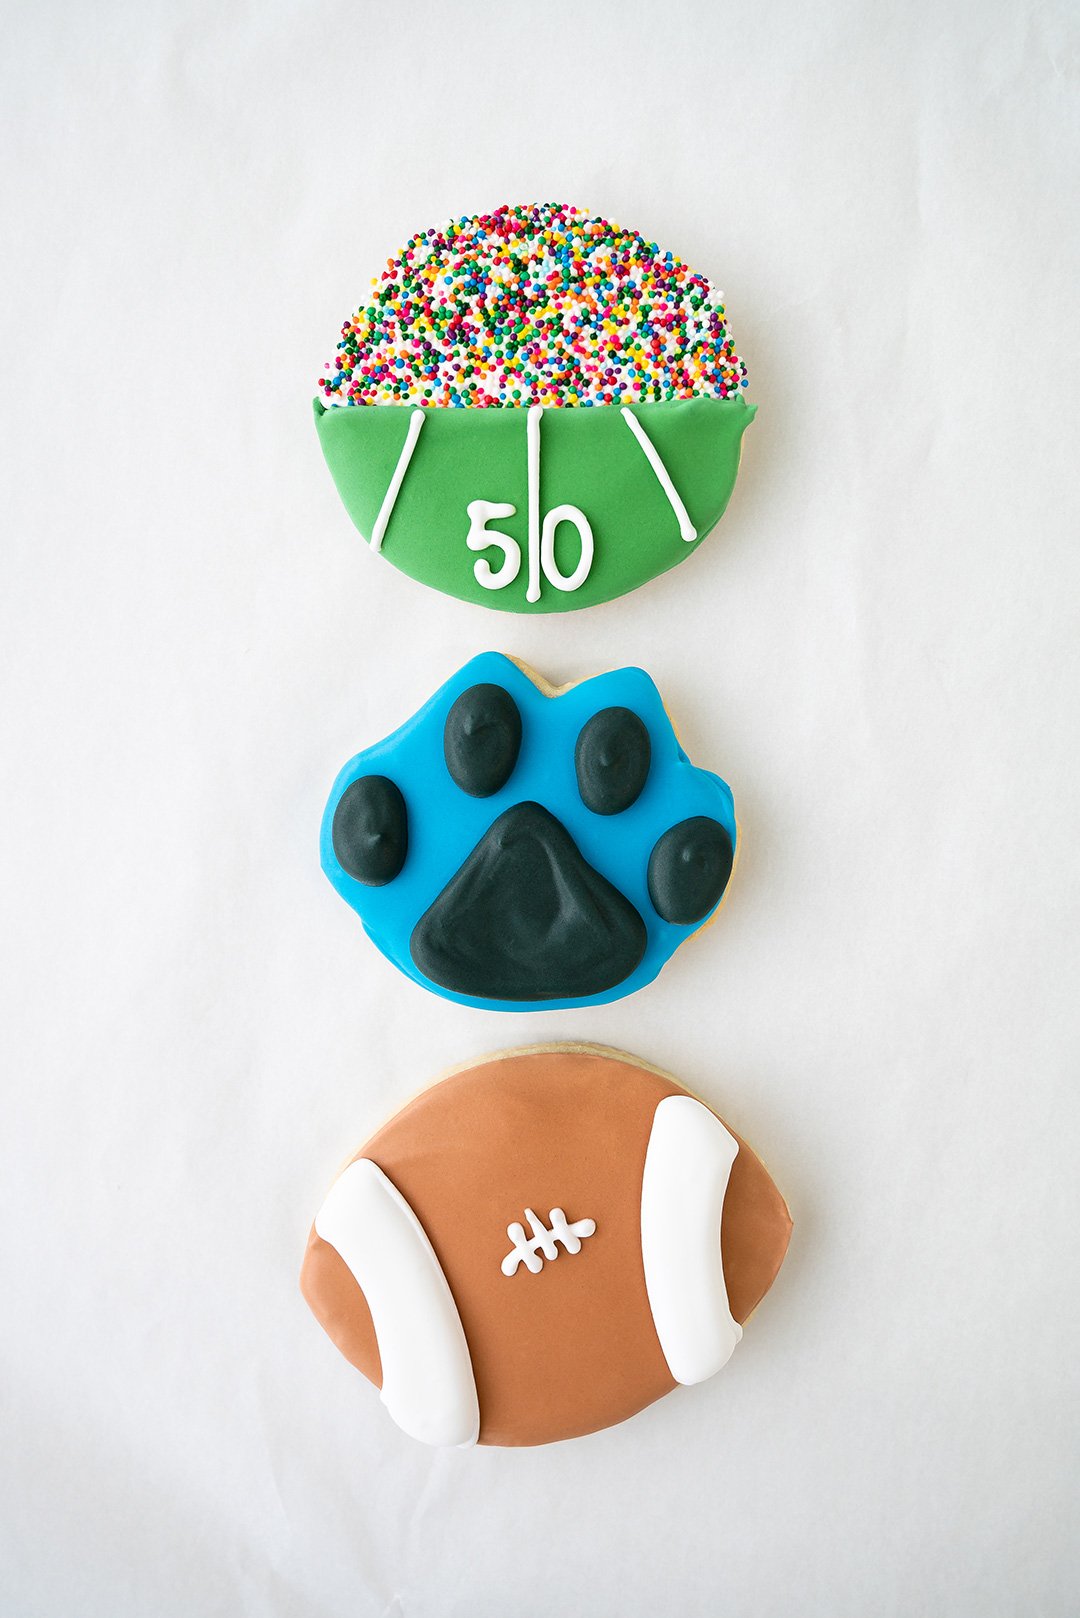 Football Cookie Decorating Kit › Sugar Art Cake & Candy Supplies